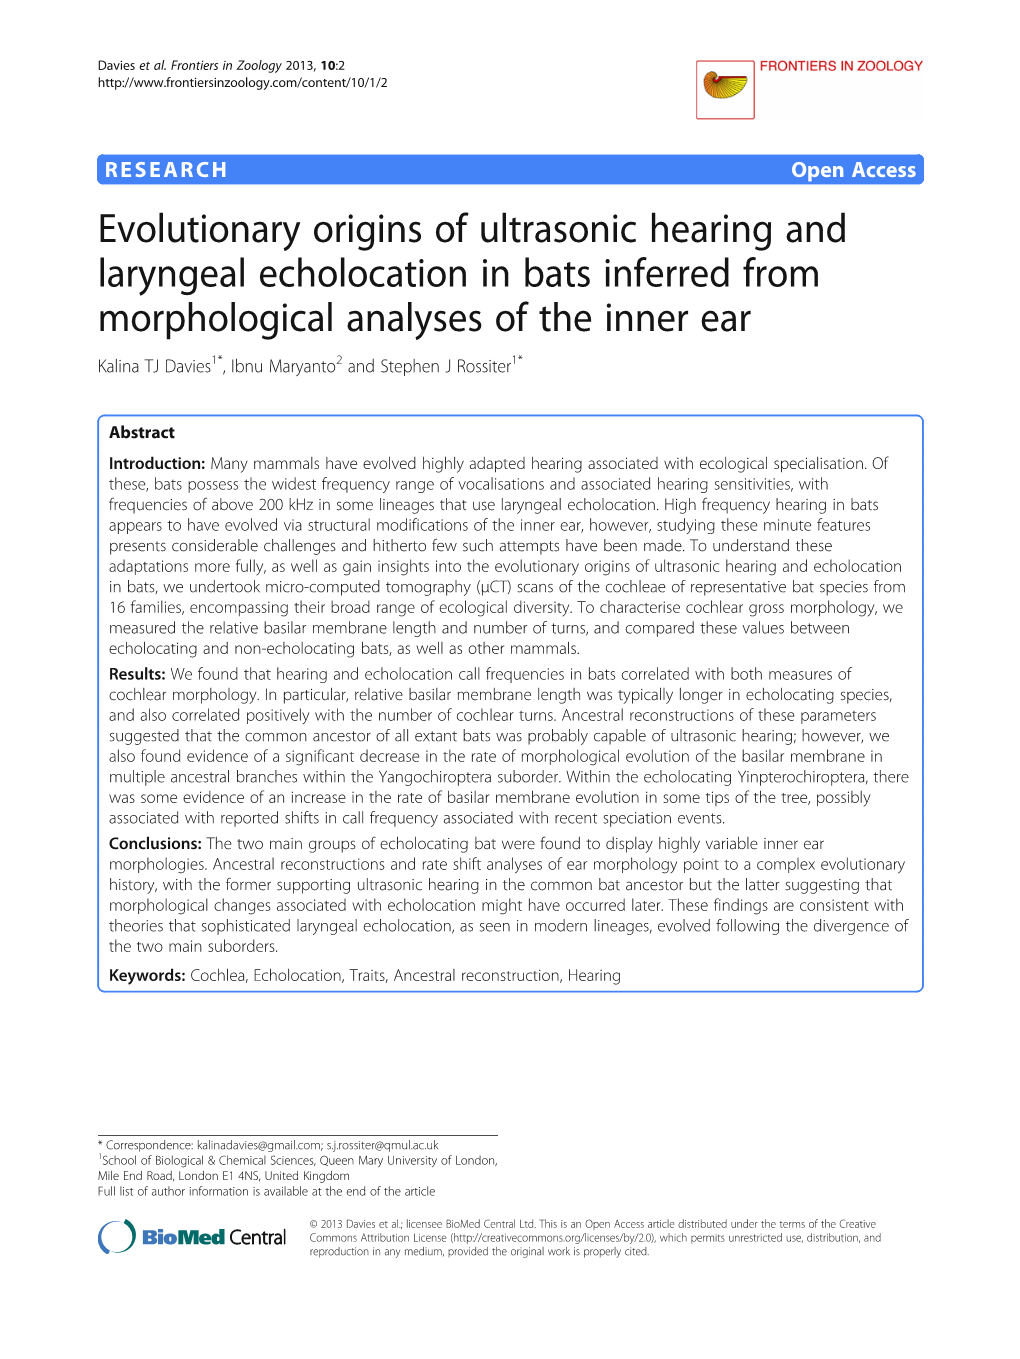 Evolutionary Origins of Ultrasonic Hearing and Laryngeal Echolocation